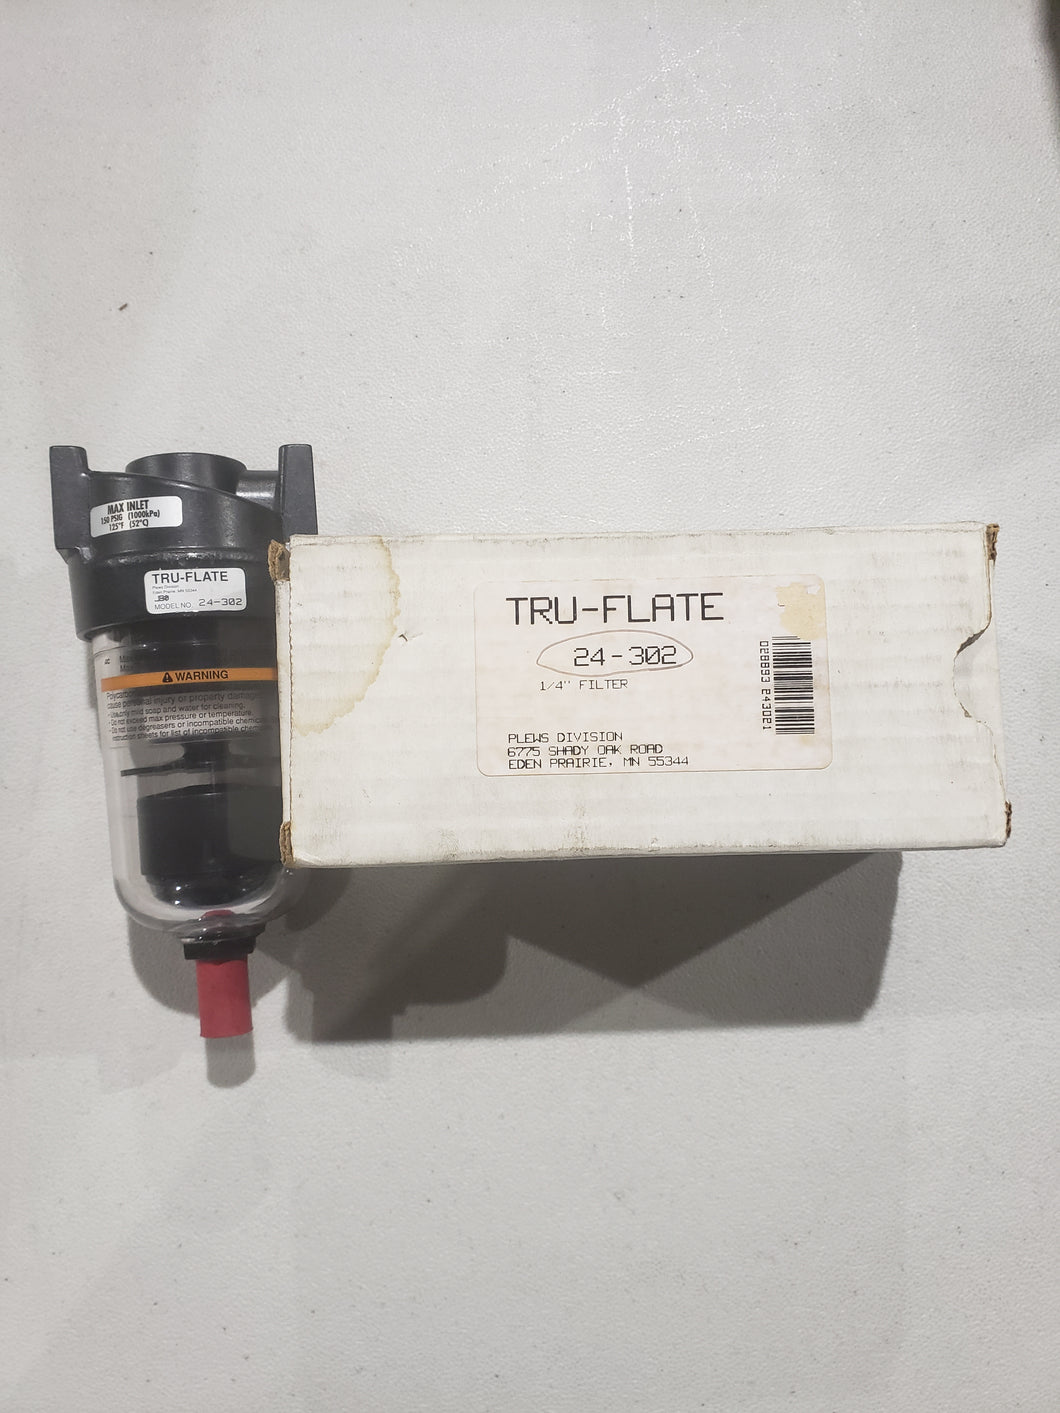 New tru-flate air line filter 24-302 for compressors - FreemanLiquidators